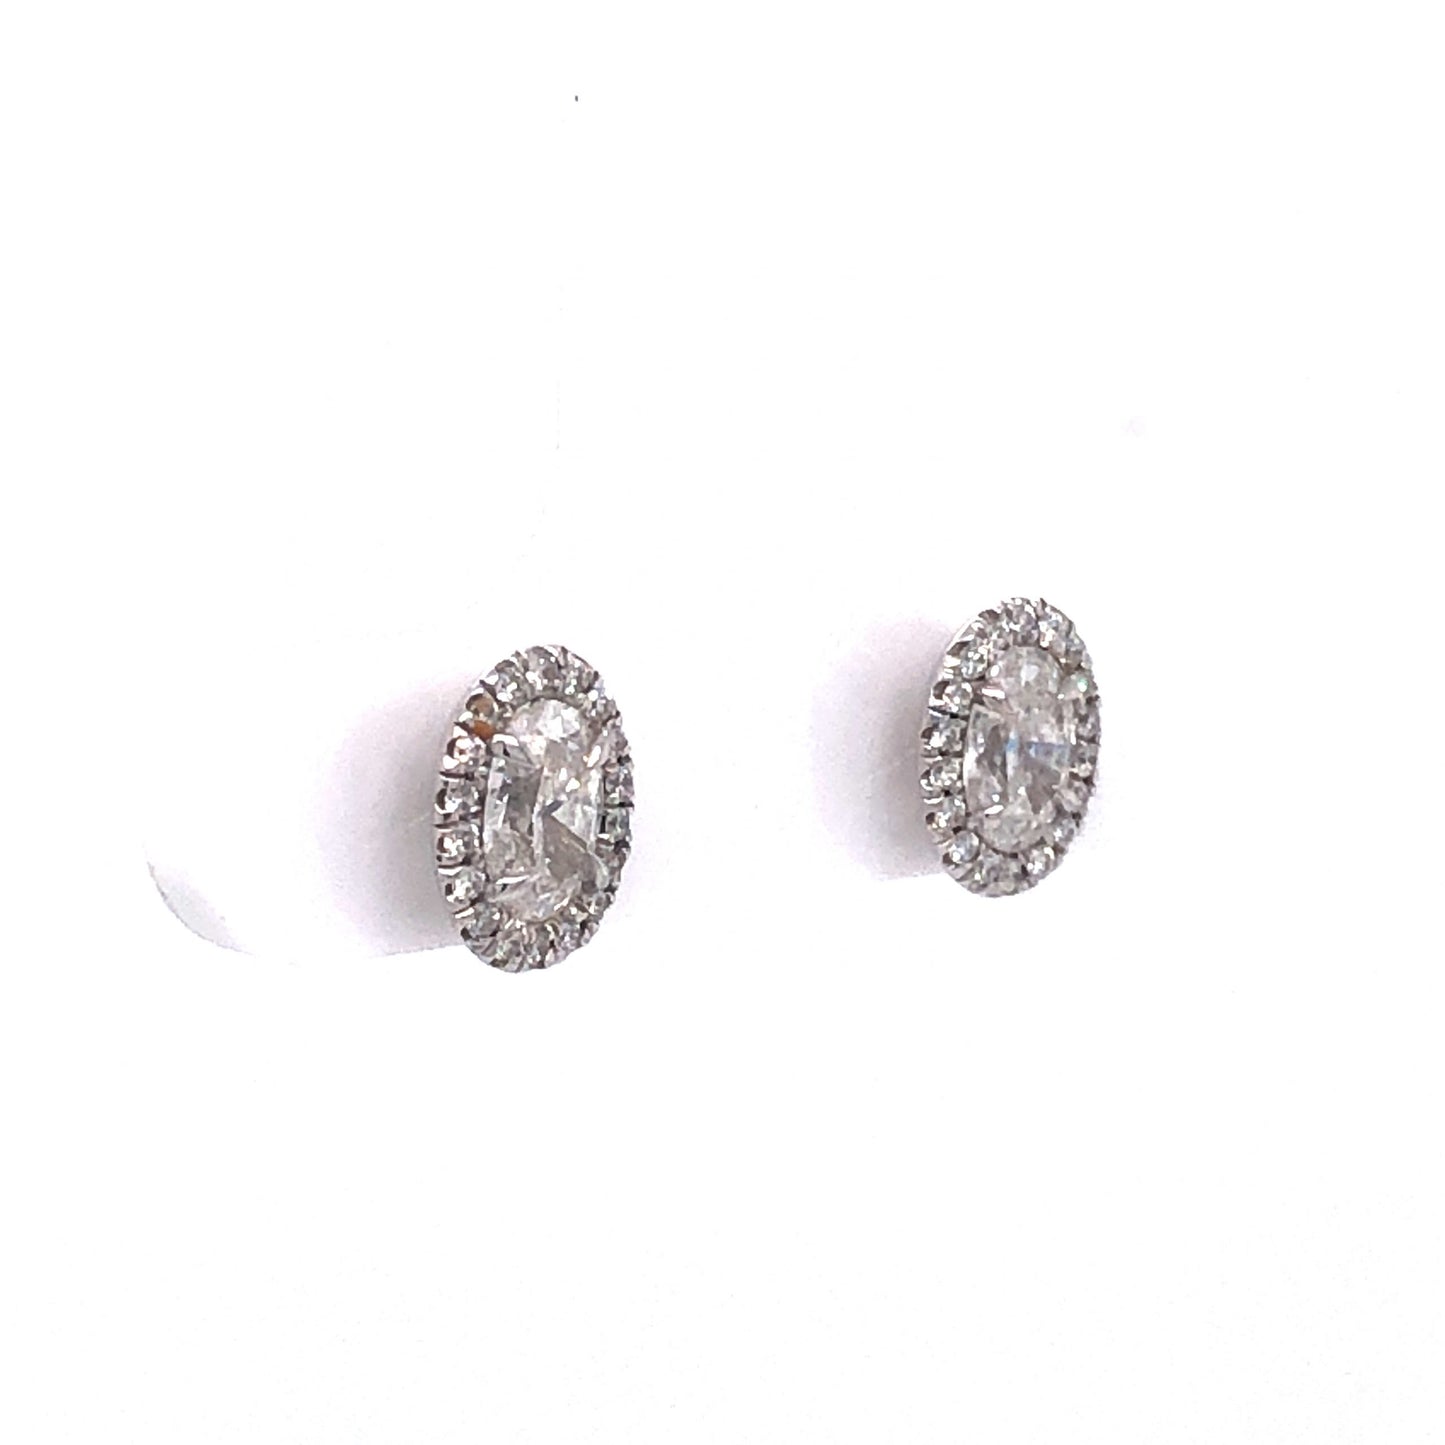 Oval Cut Diamond Halo Earring Studs in 18k White Gold